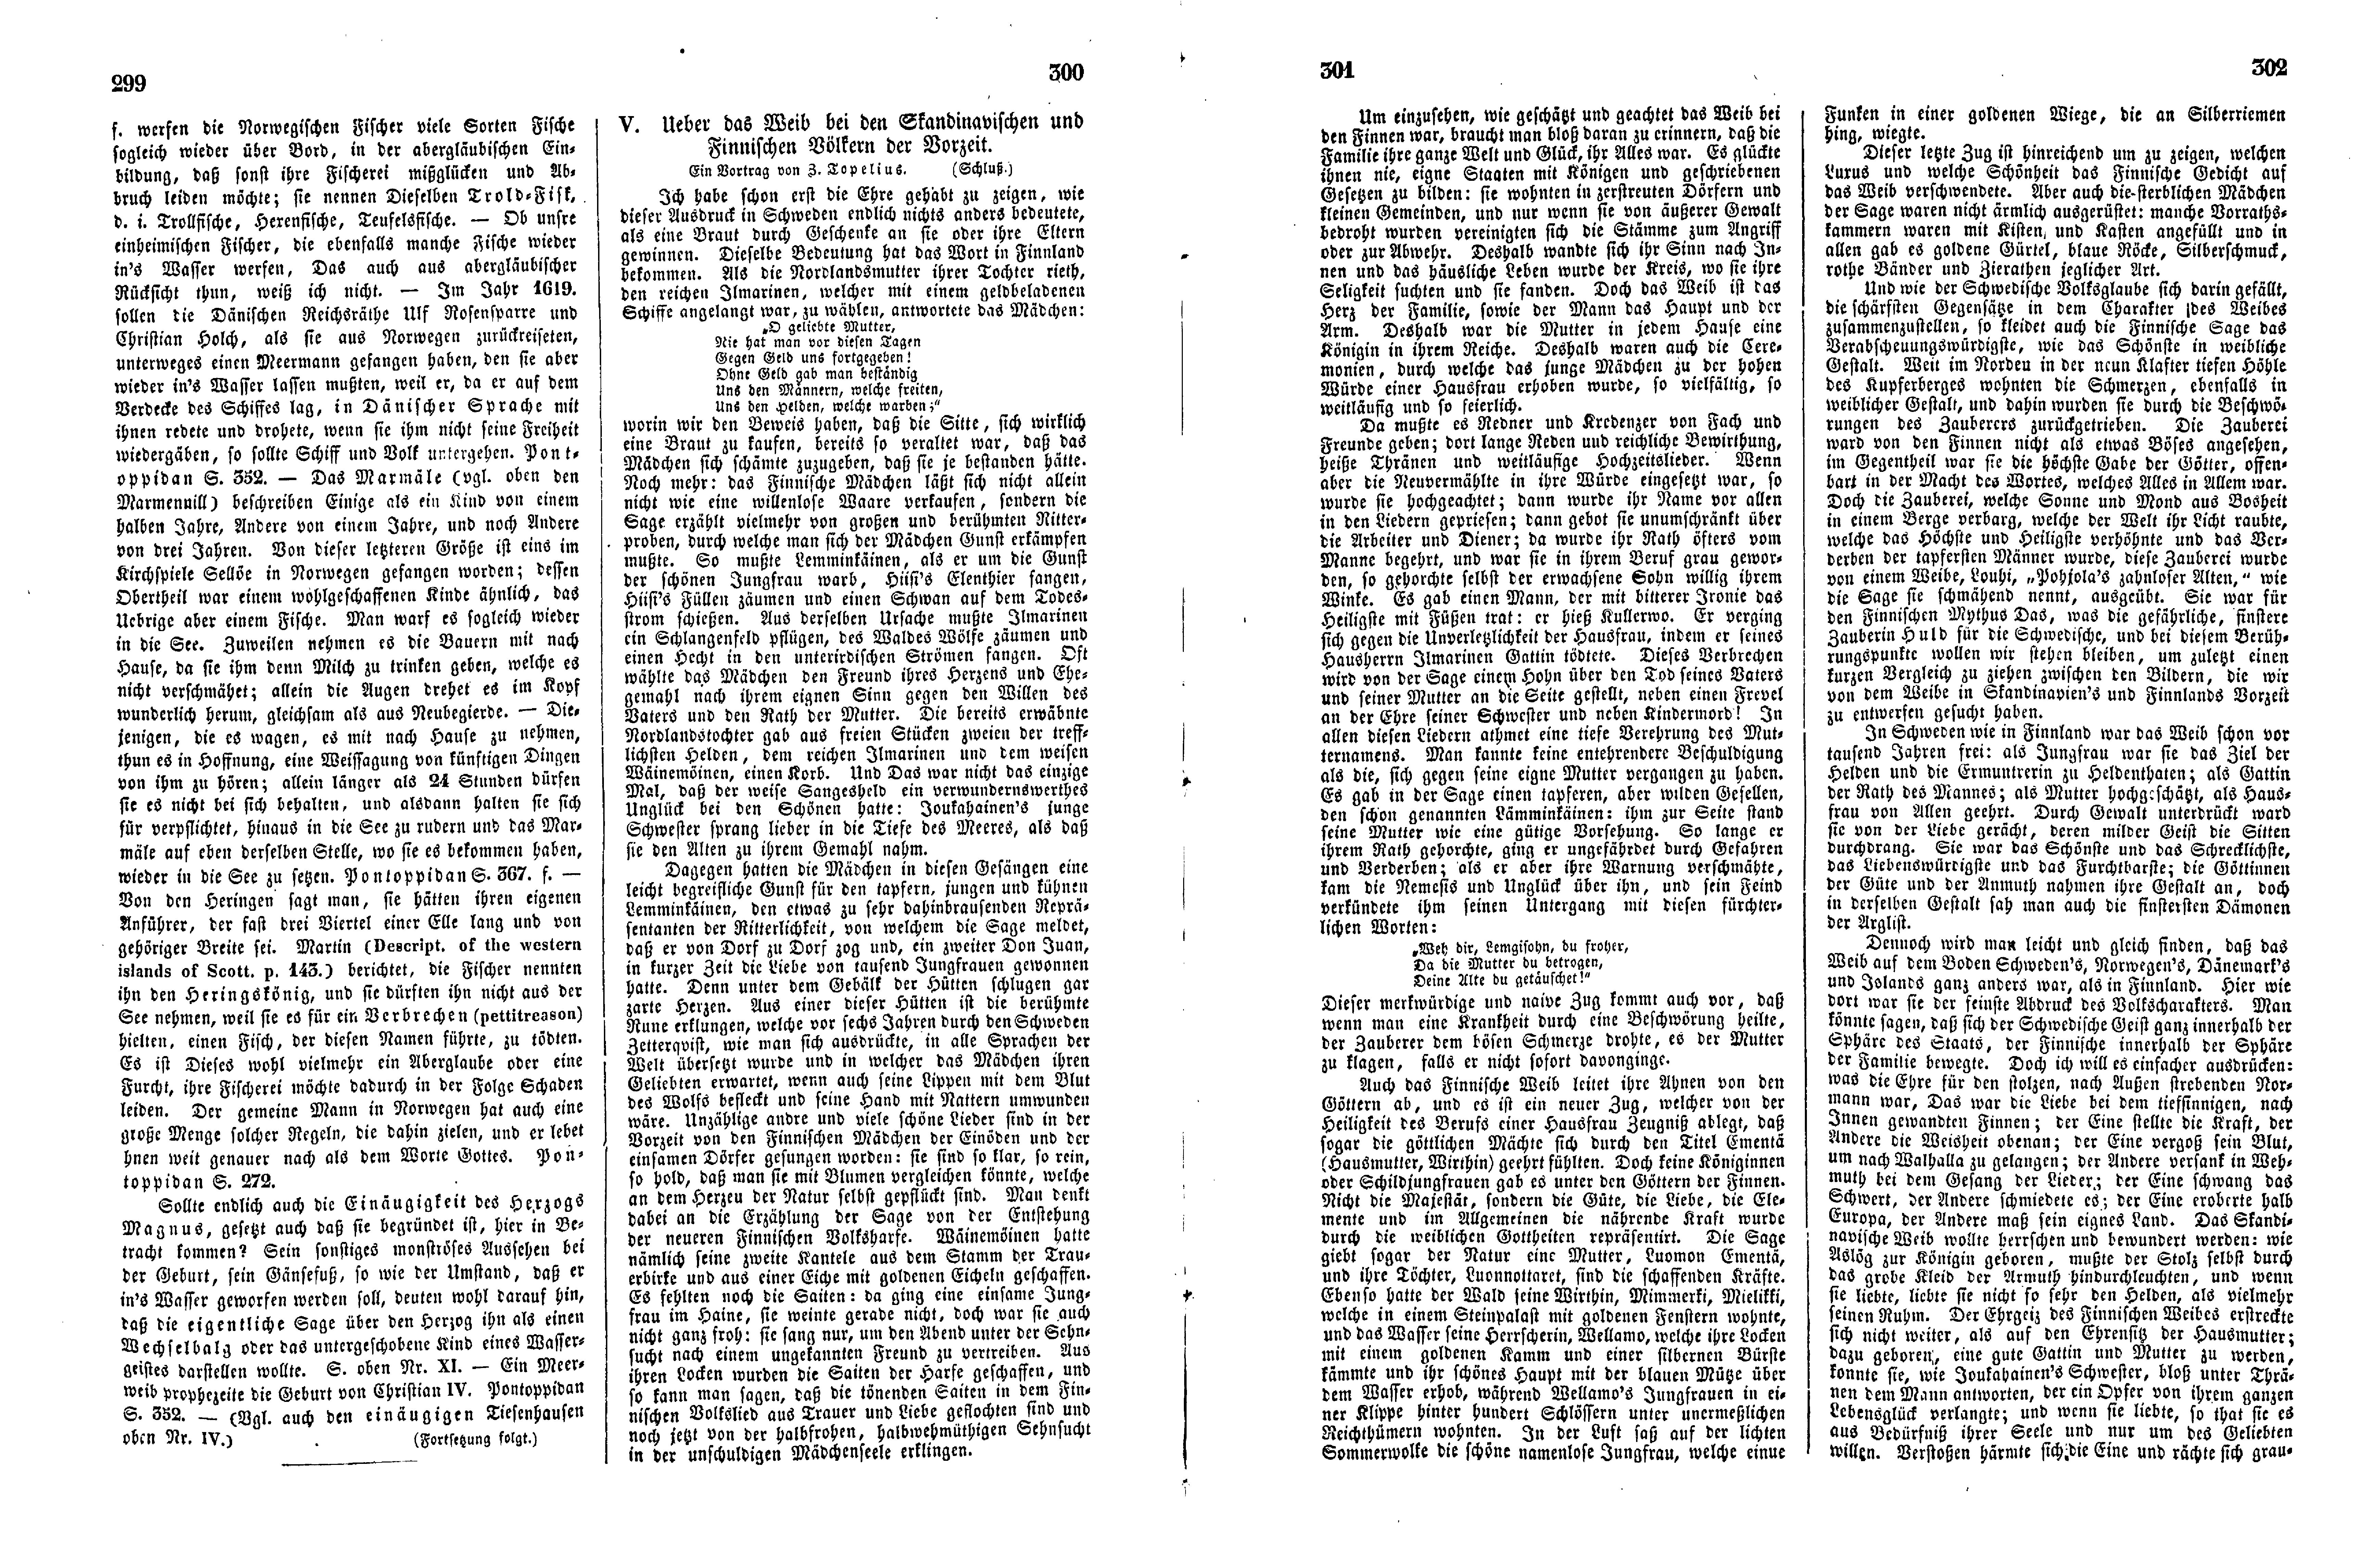 Das Inland [17] (1852) | 79. (299-302) Main body of text